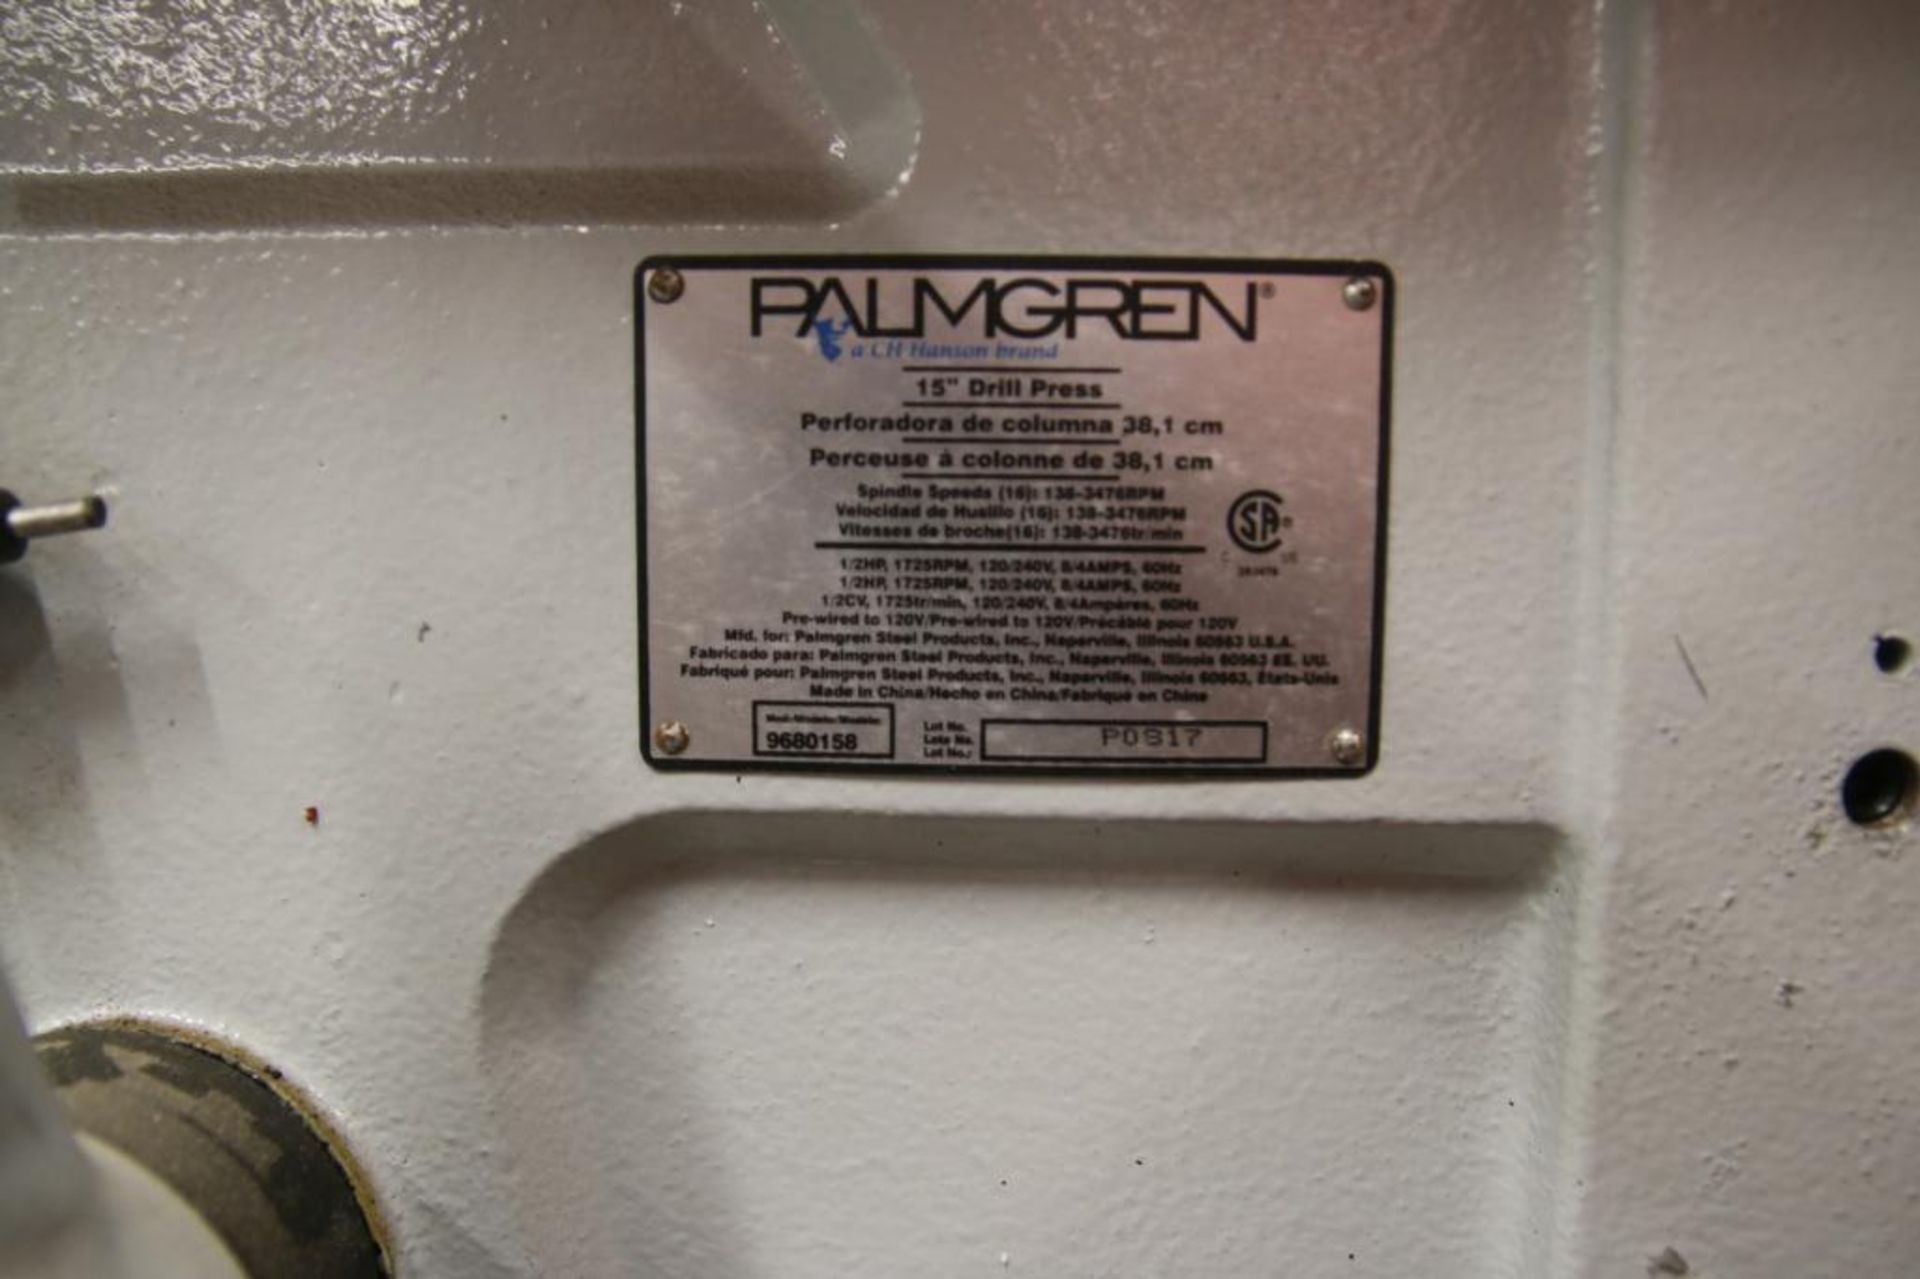 Palmgren 9680158 15" Floor Drill Press - Image 5 of 5